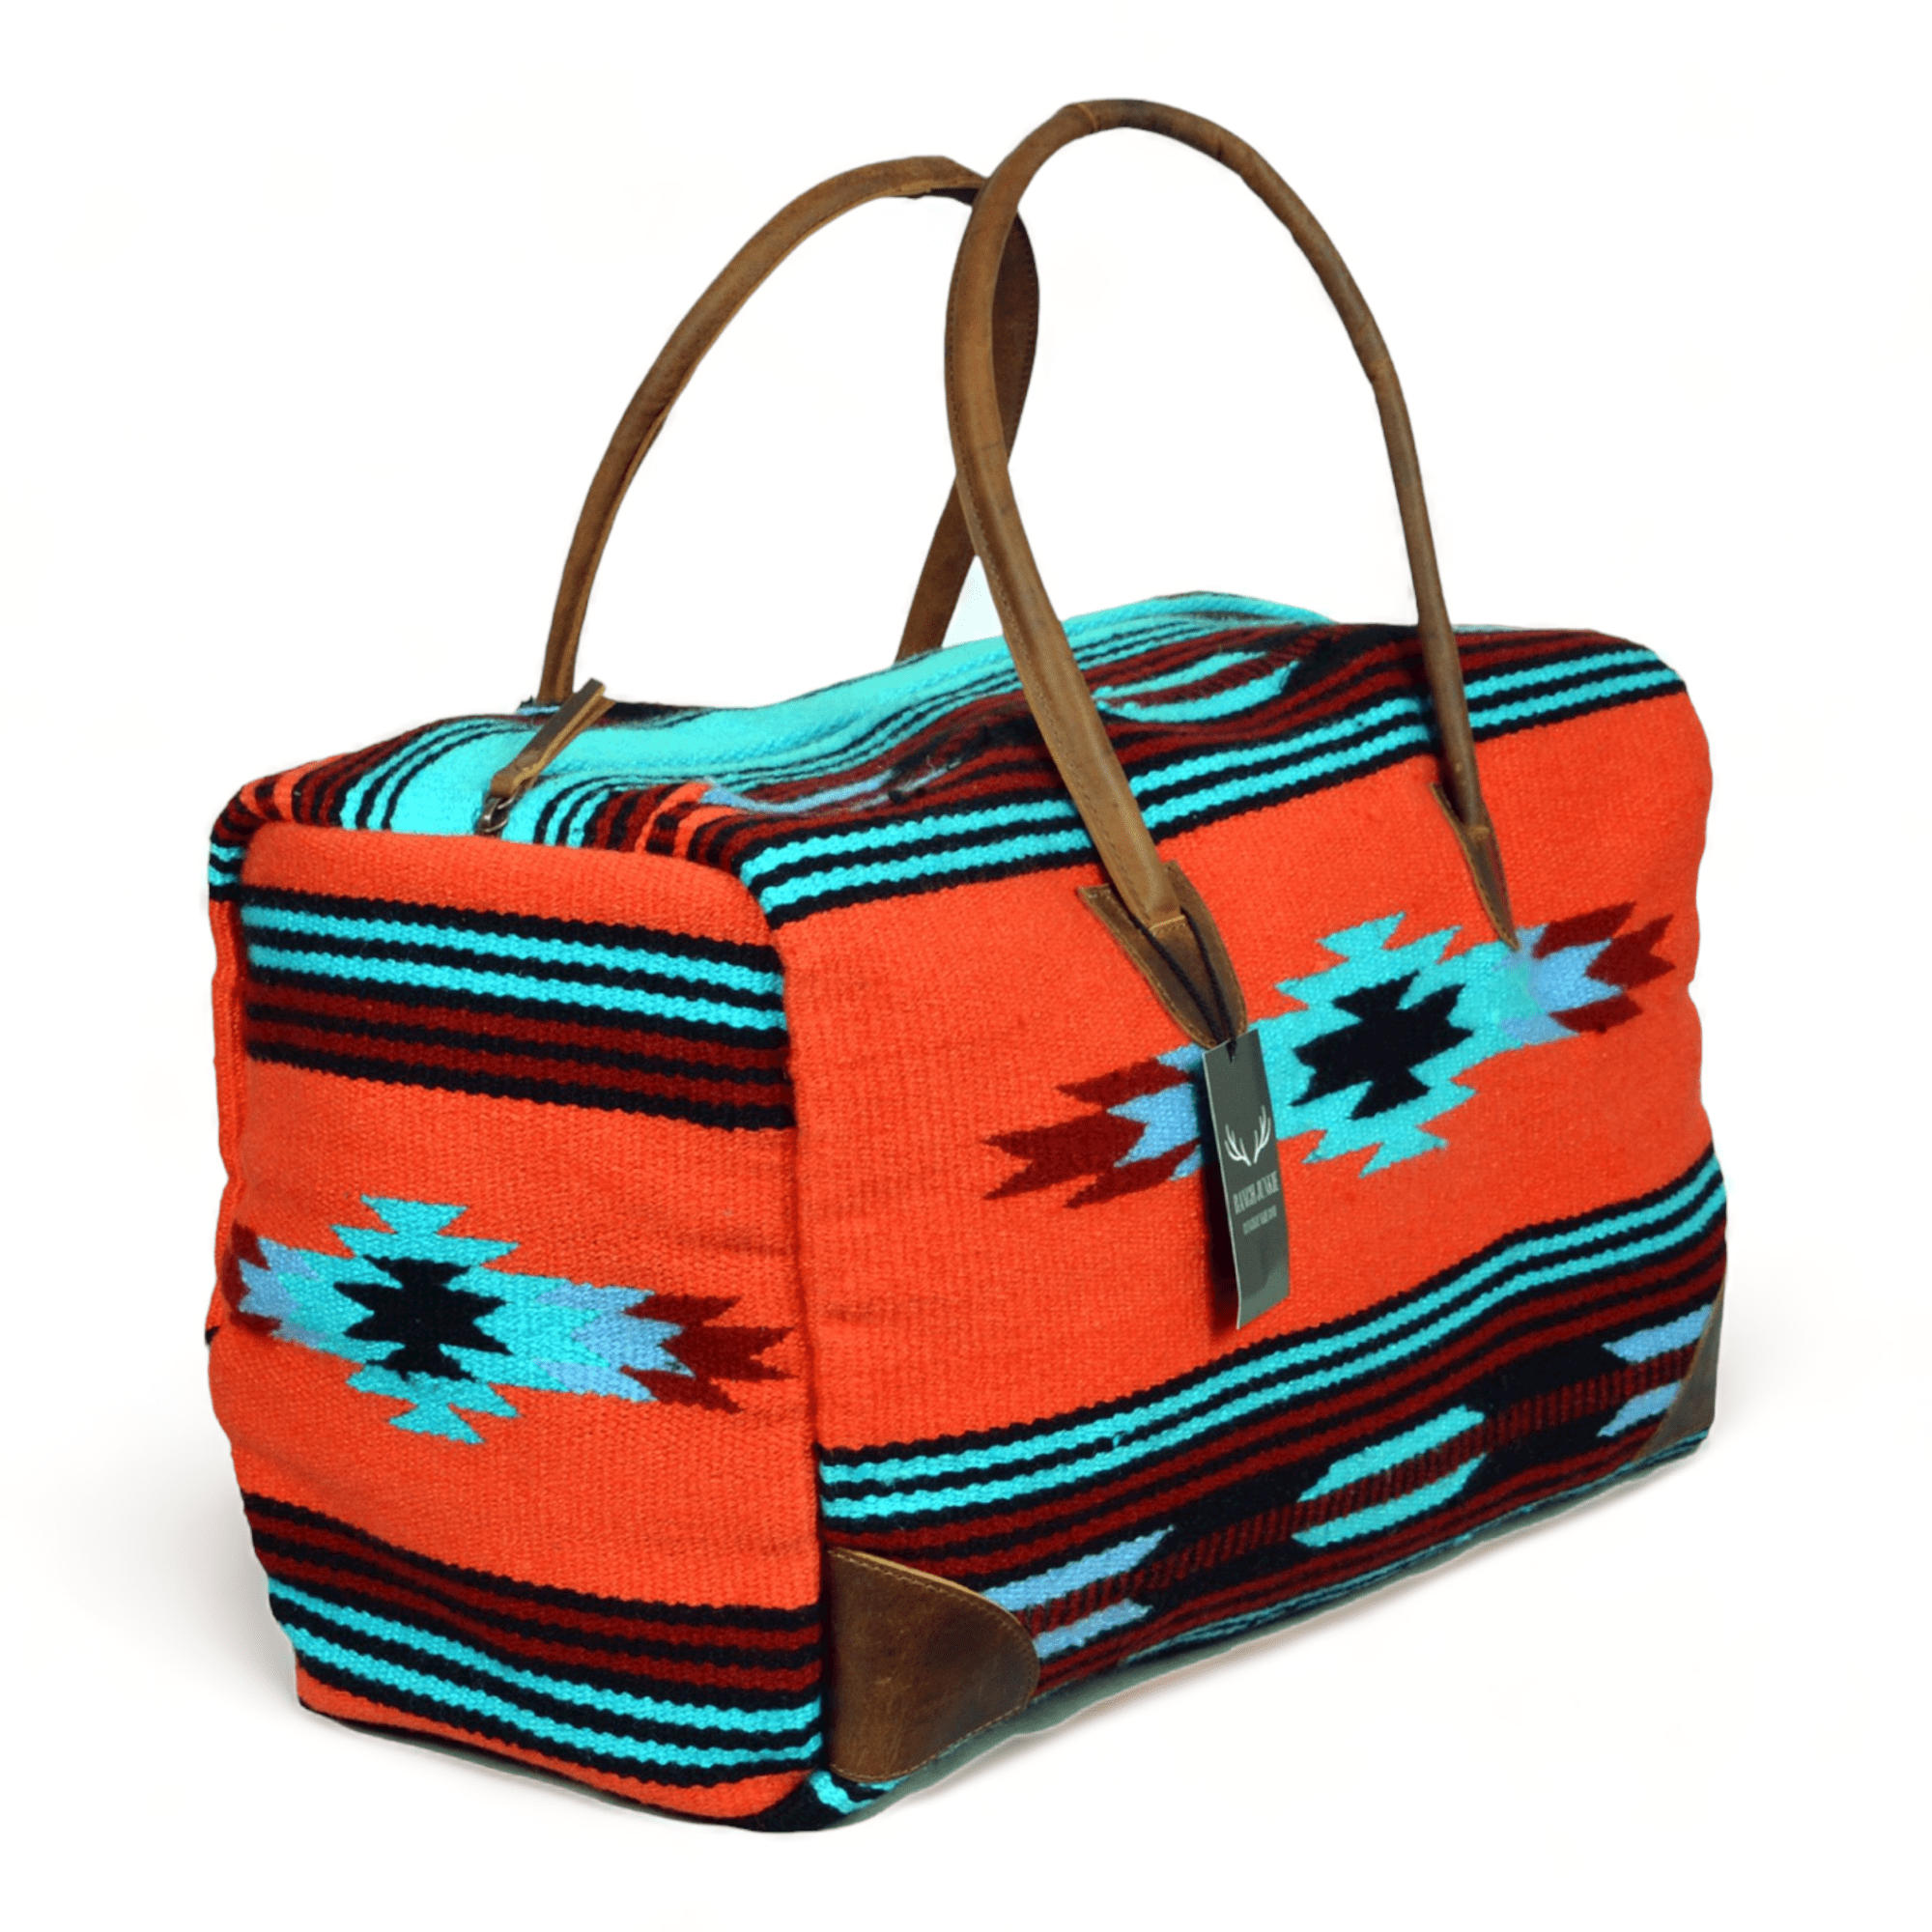 Sedona Boho Aztec Large Weekender Southwestern Duffel Bag Saddle Blanket Bag 100% Leather Handles Luggage & BagsRanch Junkie